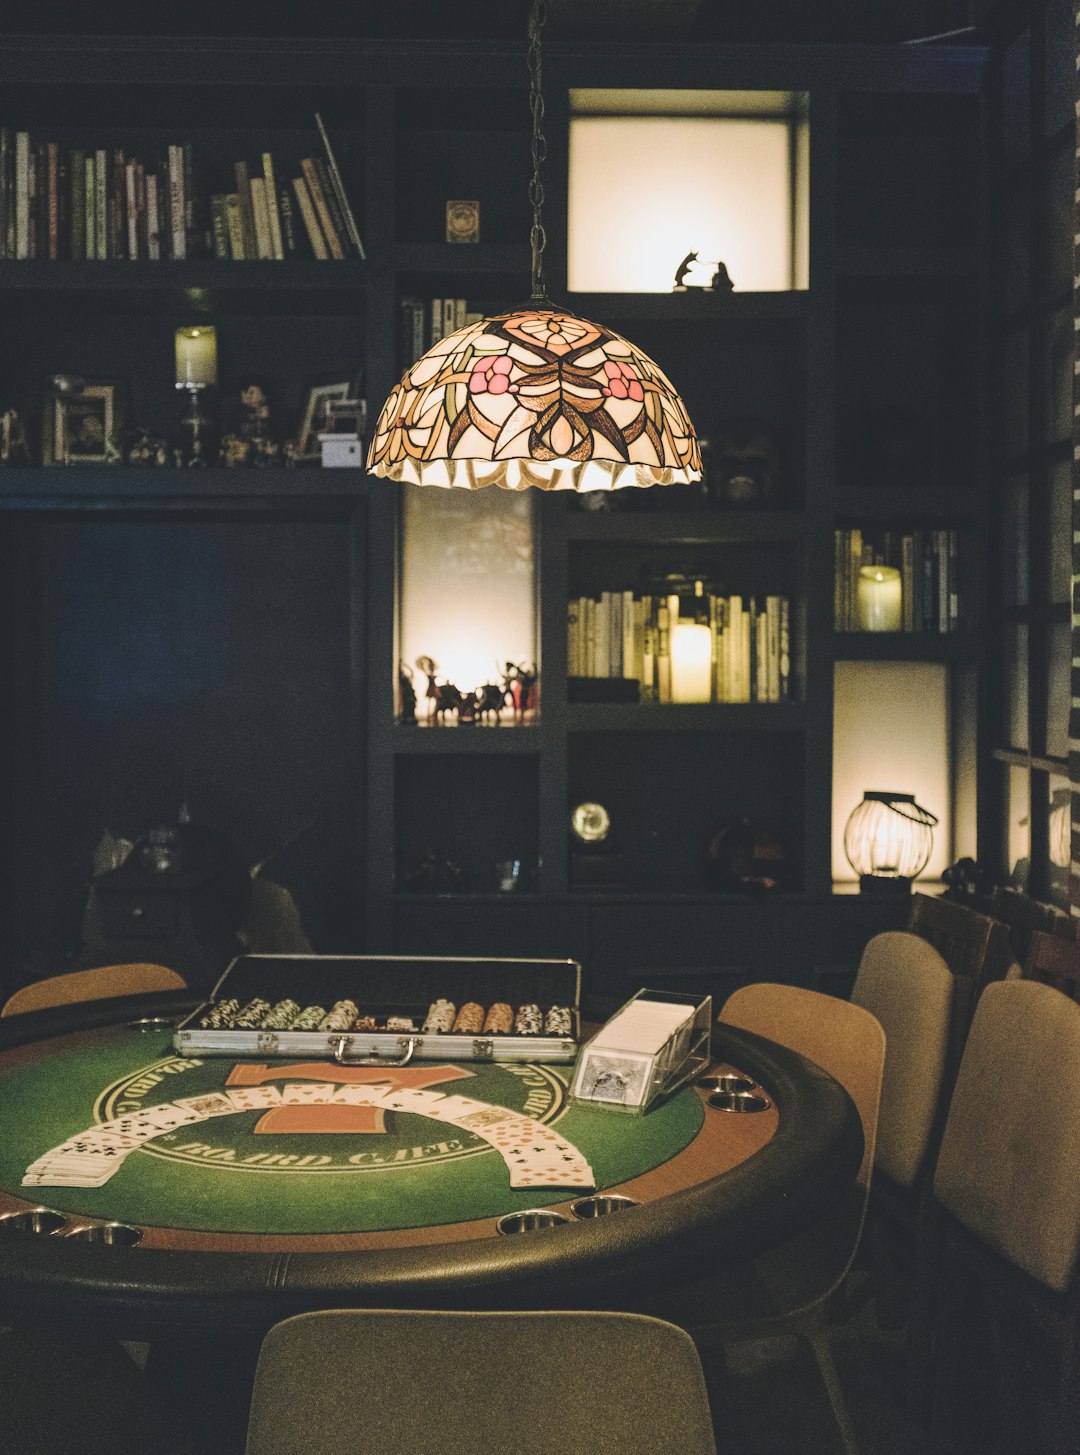 tiffany pendant lamp near poker table